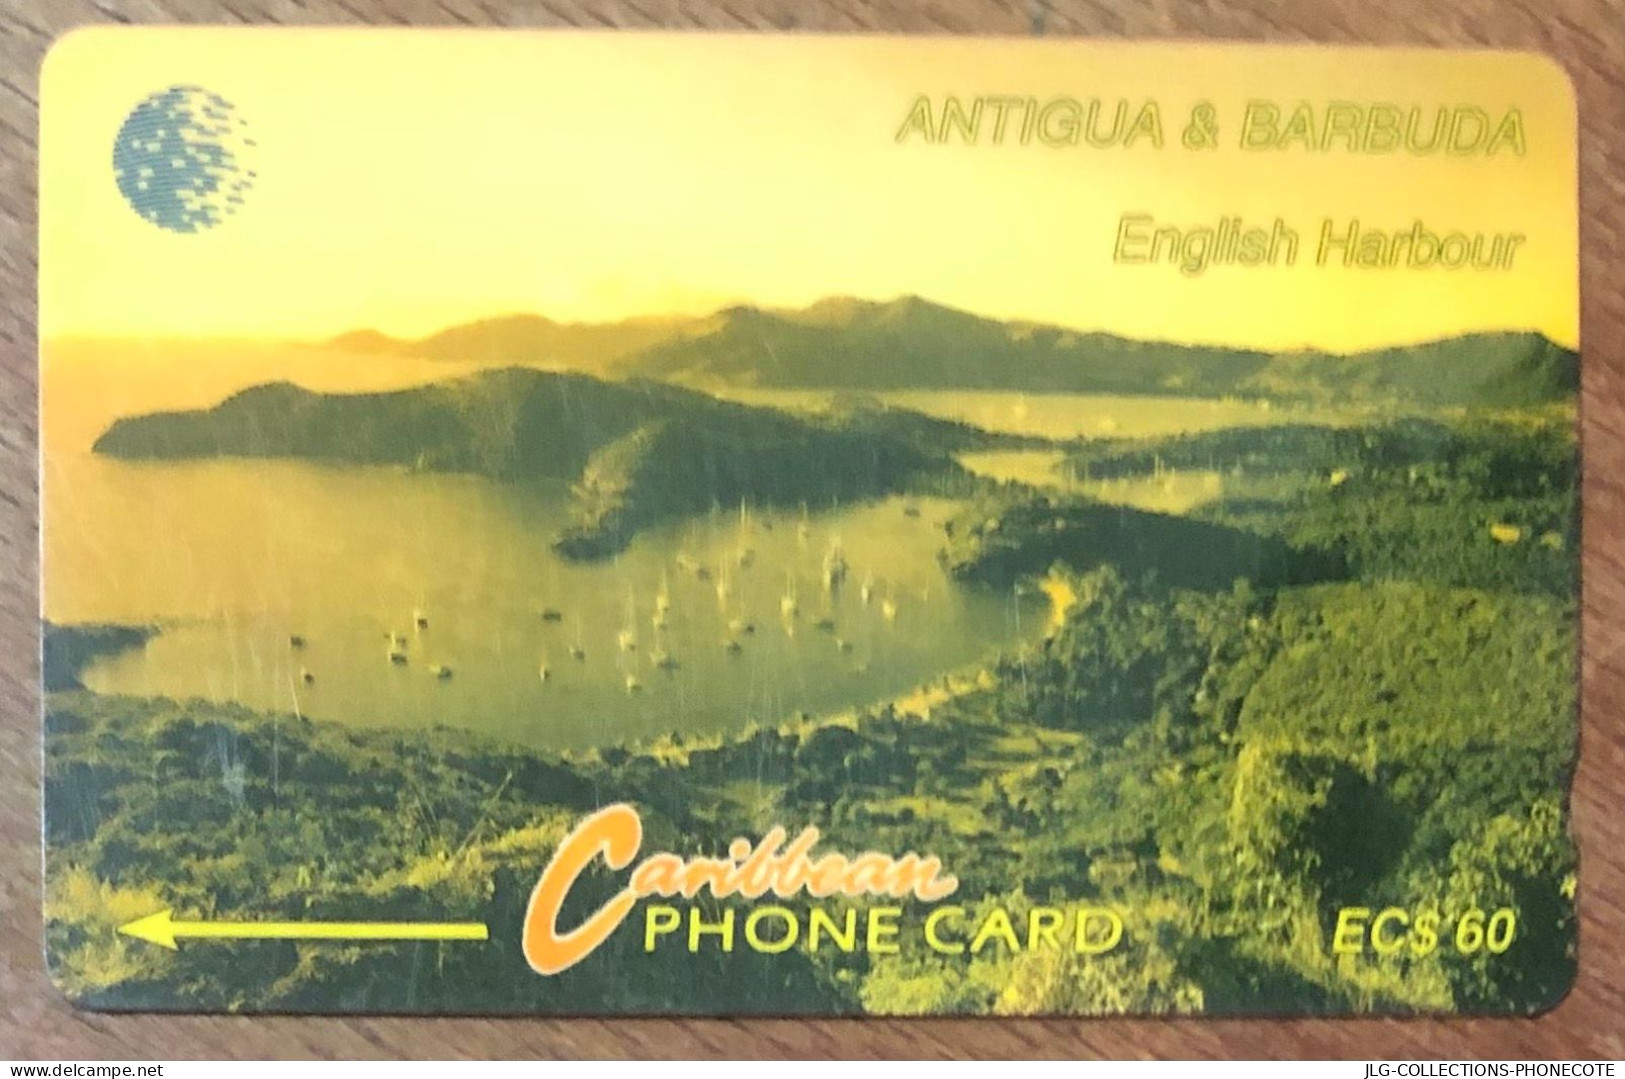 ANTIGUA & BARBUDA ENGLISH HARBOUR EC$ 60 CARIBBEAN CABLE & WIRELESS SCHEDA PREPAID TELECARTE TELEFONKARTE PHONECARD - Antigua And Barbuda